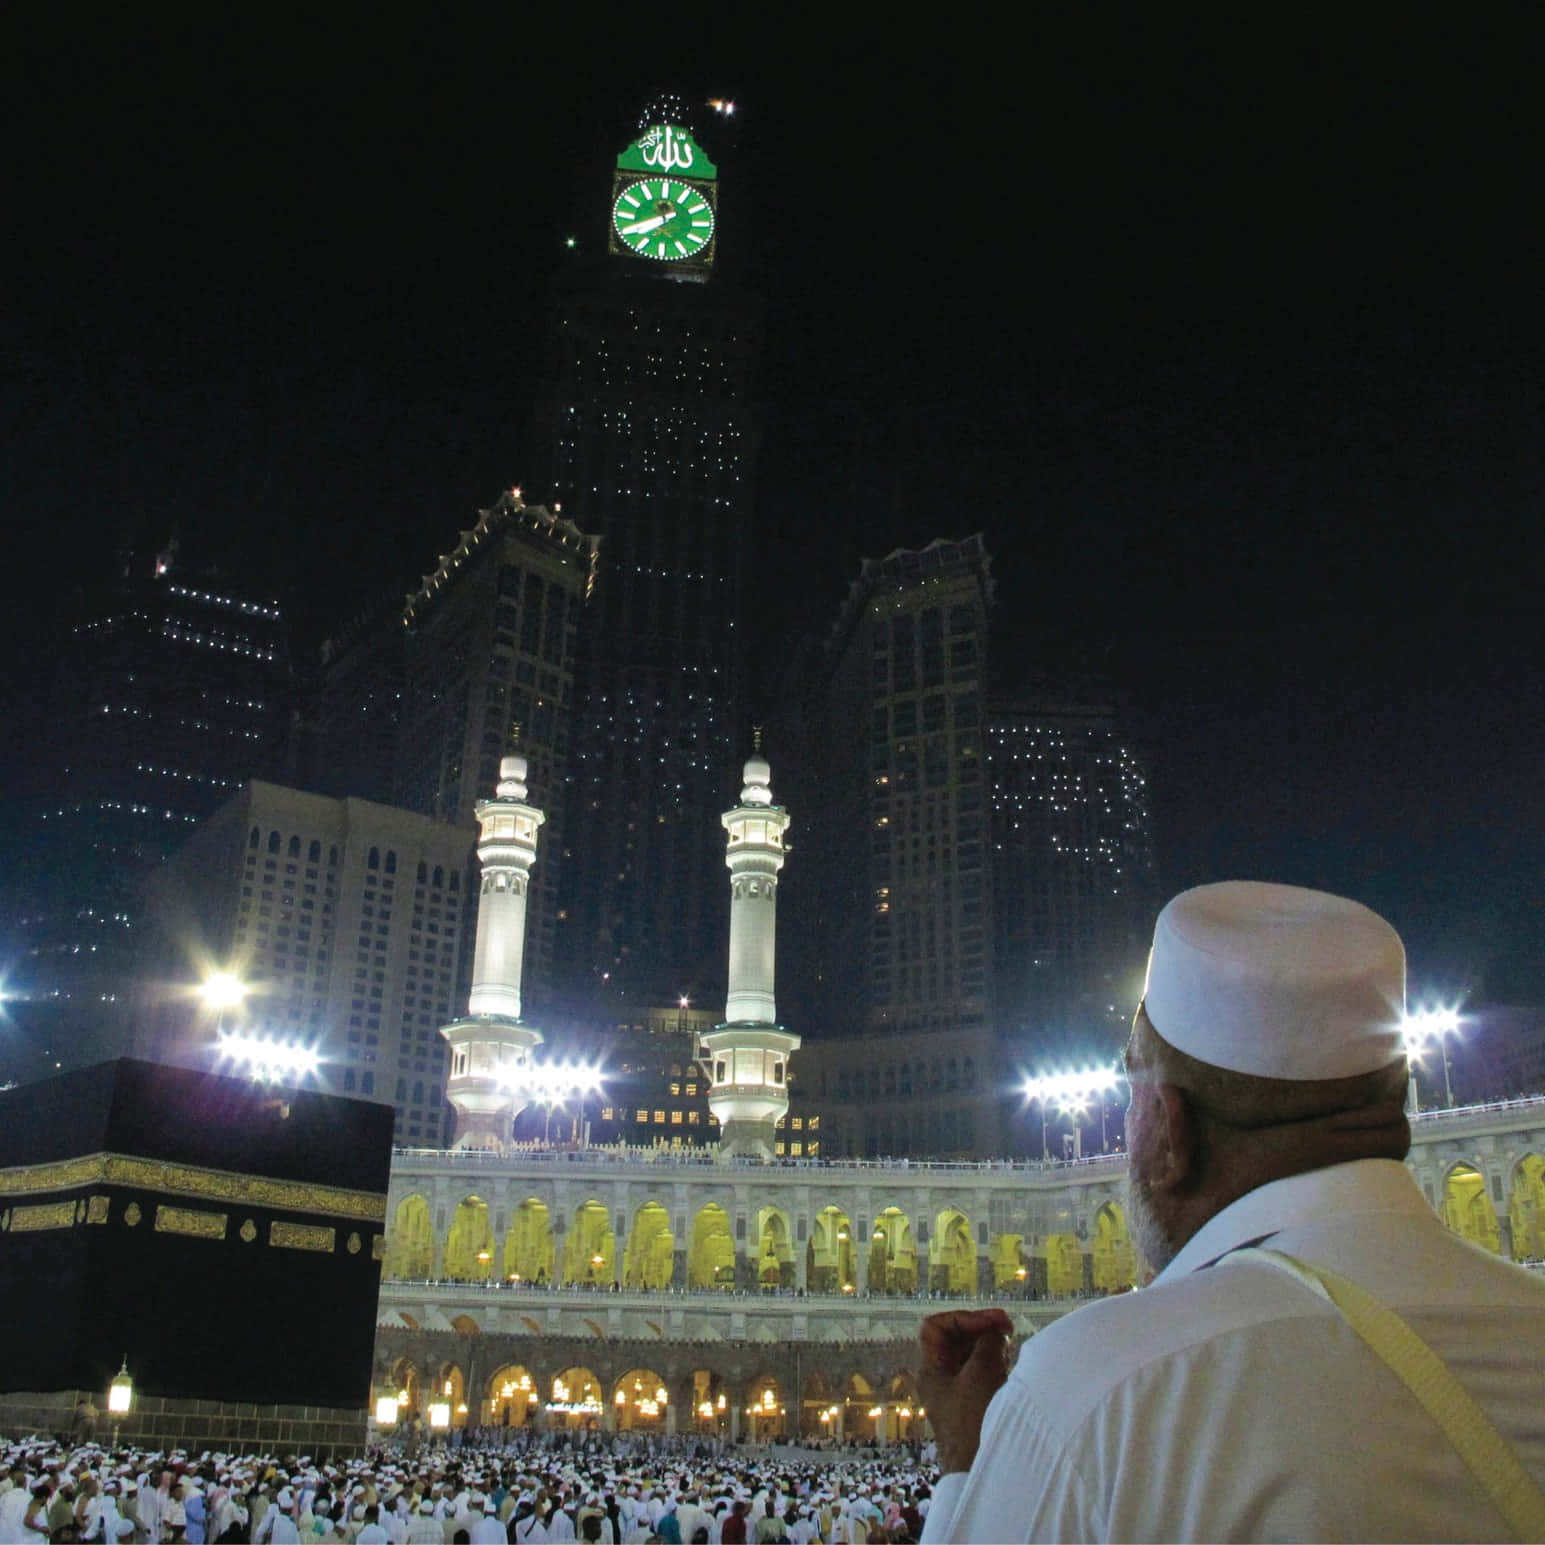 "The awe-inspiring Masjid-al-Haram, the main mosque in Mecca, Saudi Arabia"